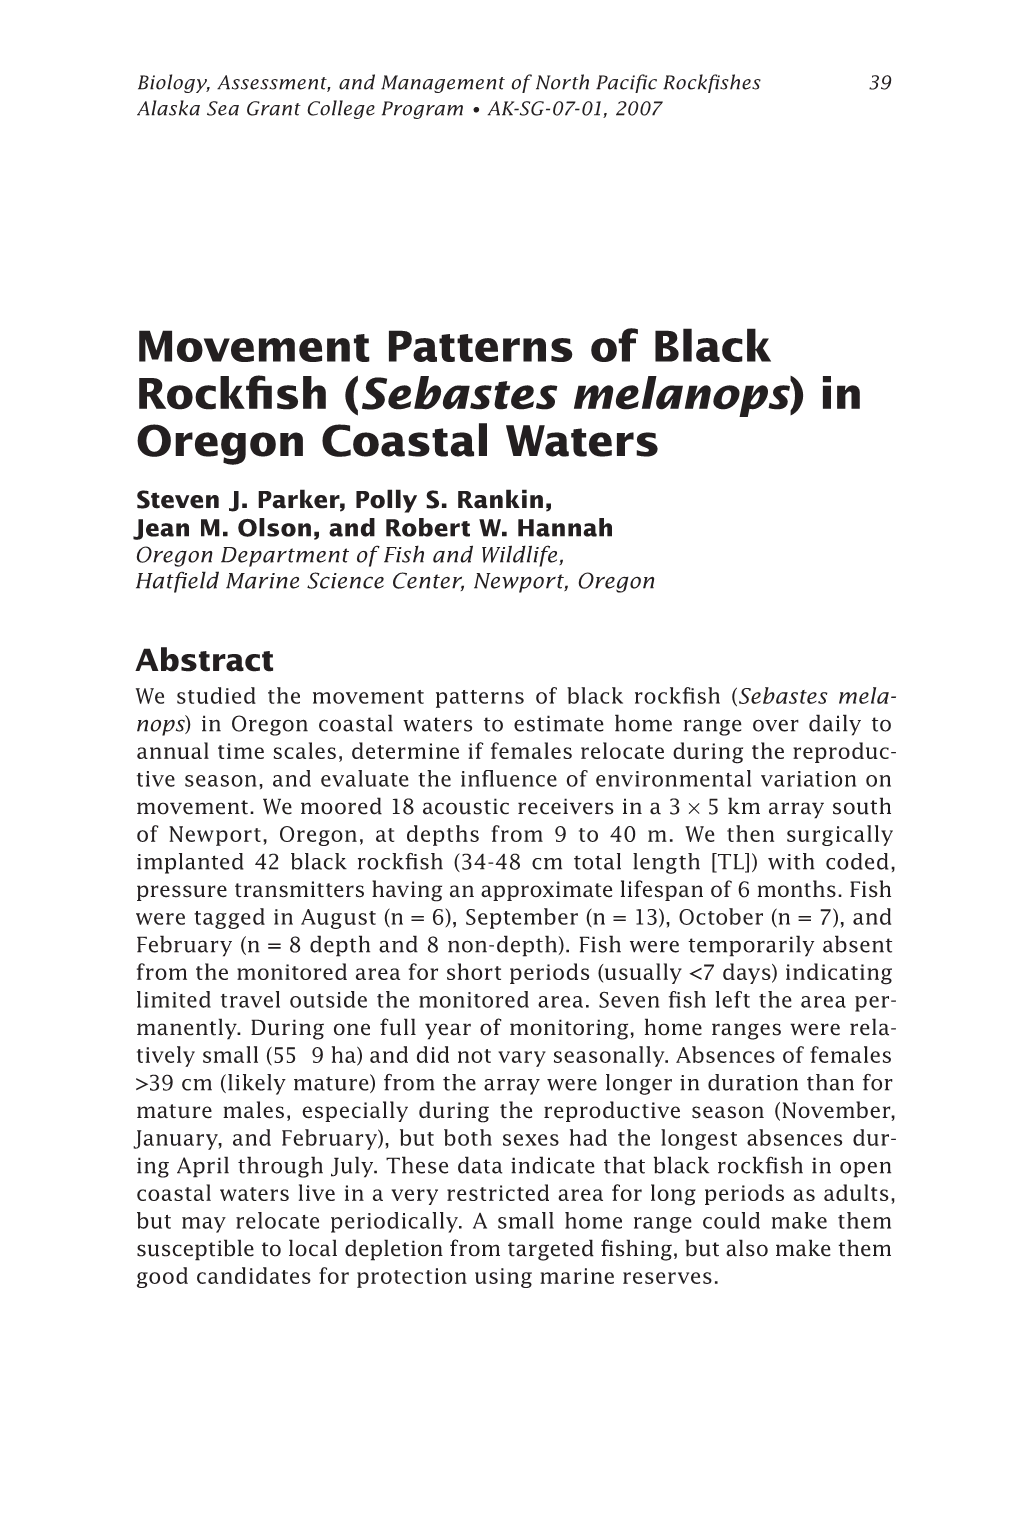 Movement Patterns of Black Rockfish (Sebastes Melanops)